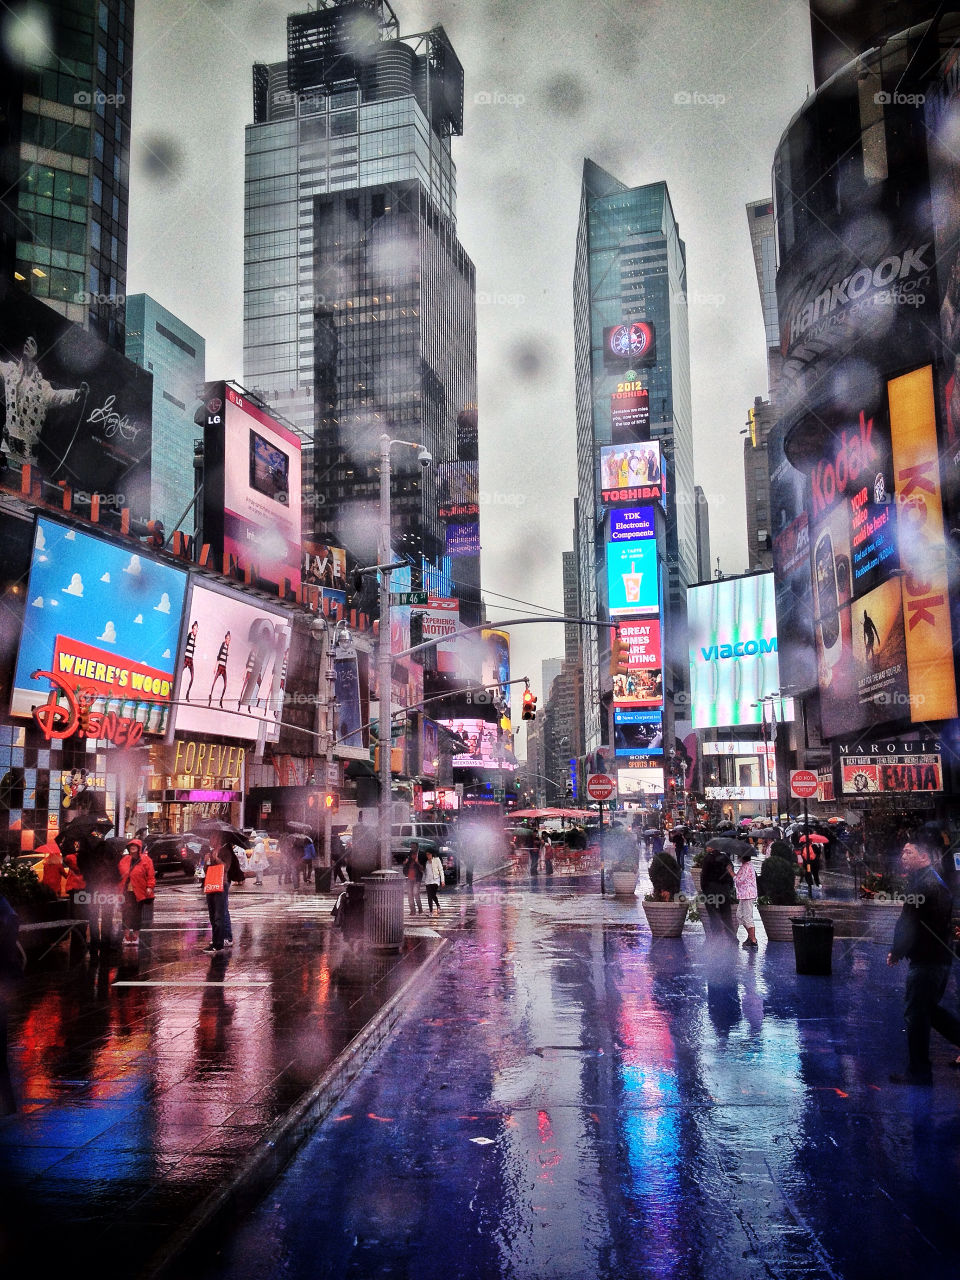 rain storm new york nyc by hellroy